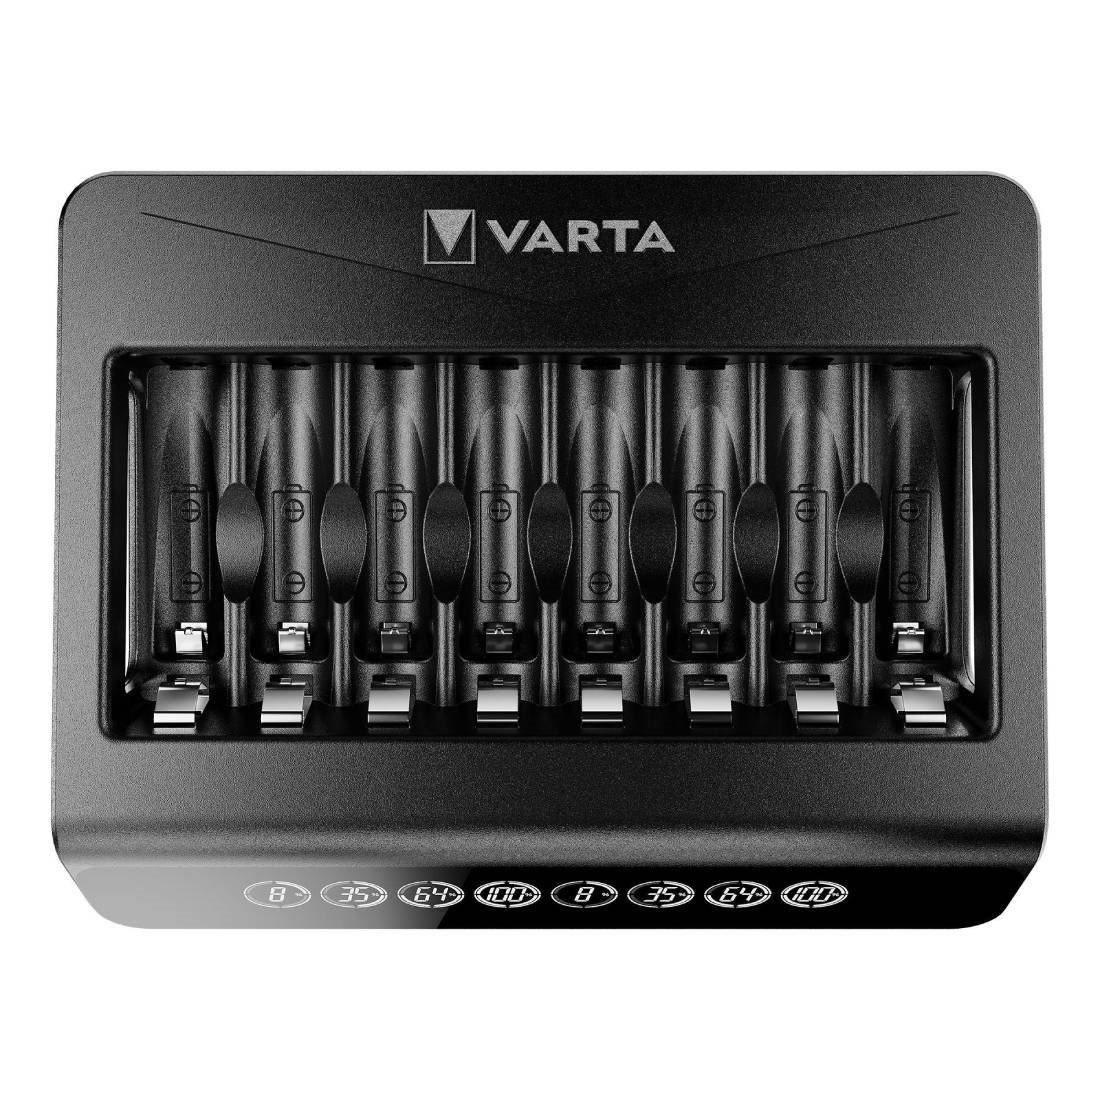 VARTA LCD Multi Charger+ töltő